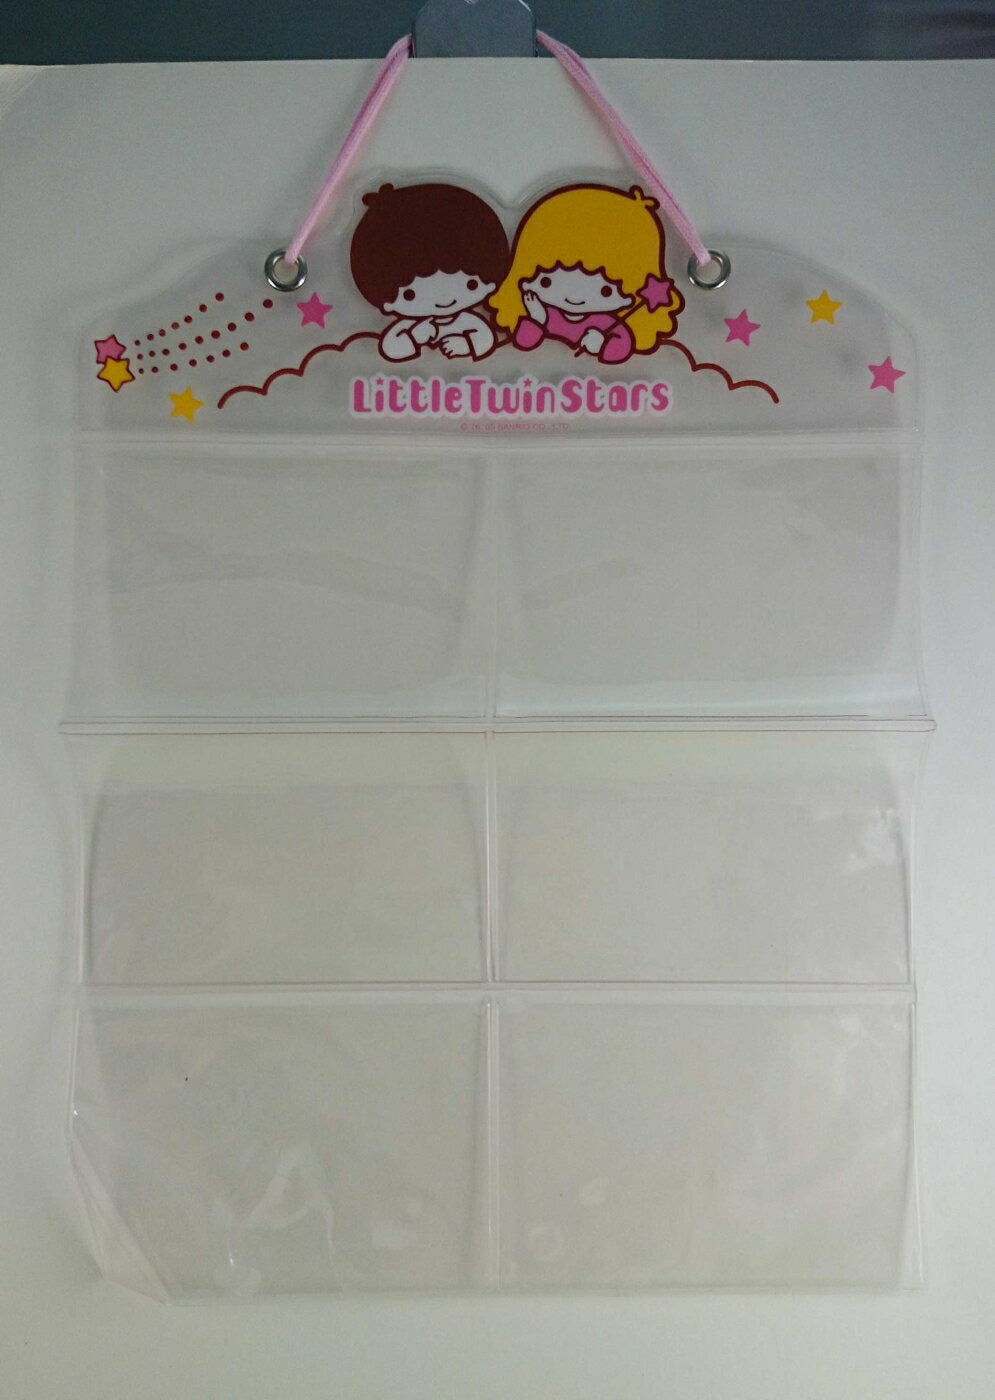 【震撼精品百貨】Little Twin Stars KiKi&LaLa 雙子星小天使 掛袋 透明 震撼日式精品百貨